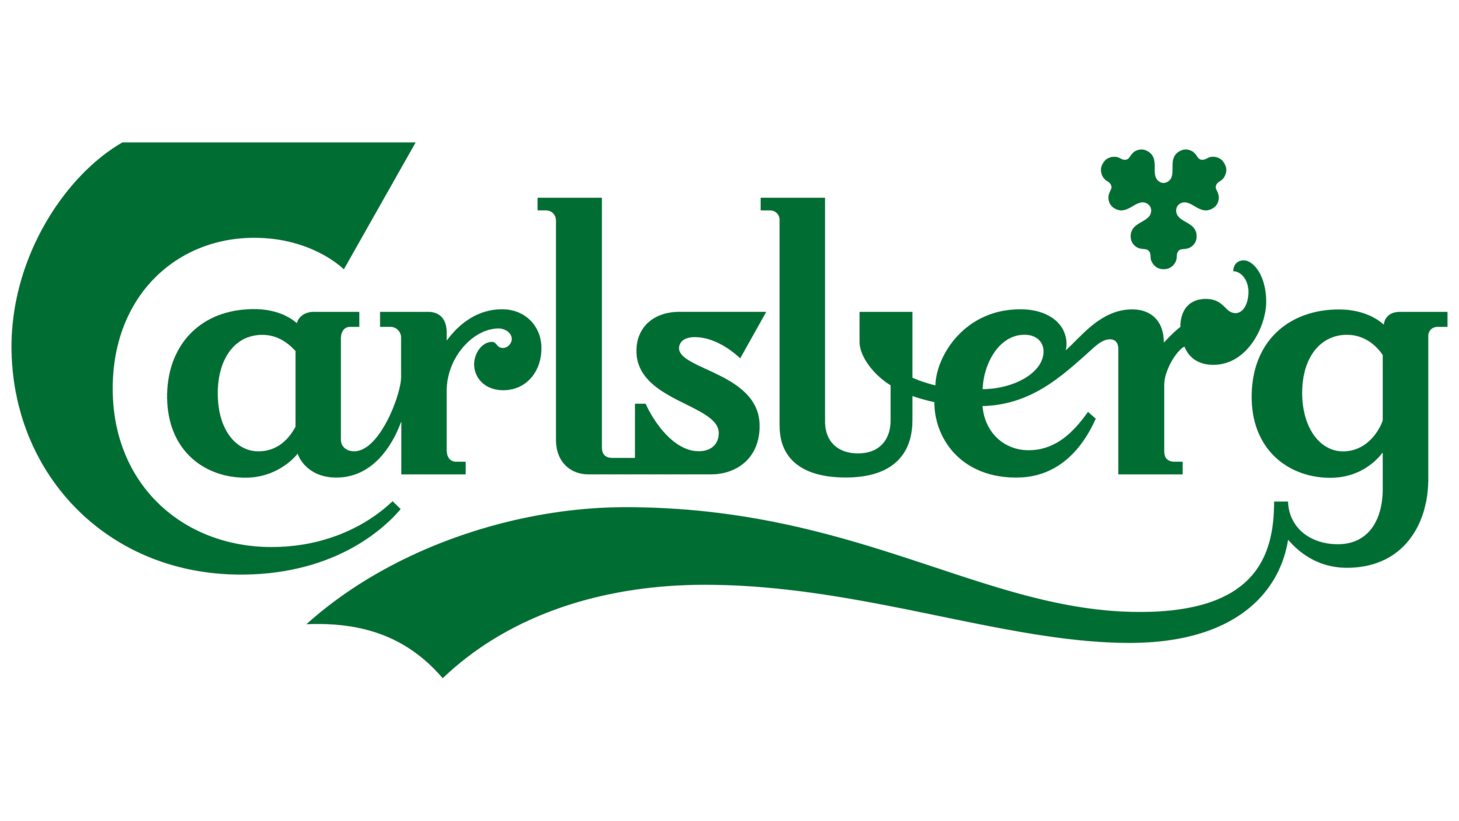 Carlsberg sign